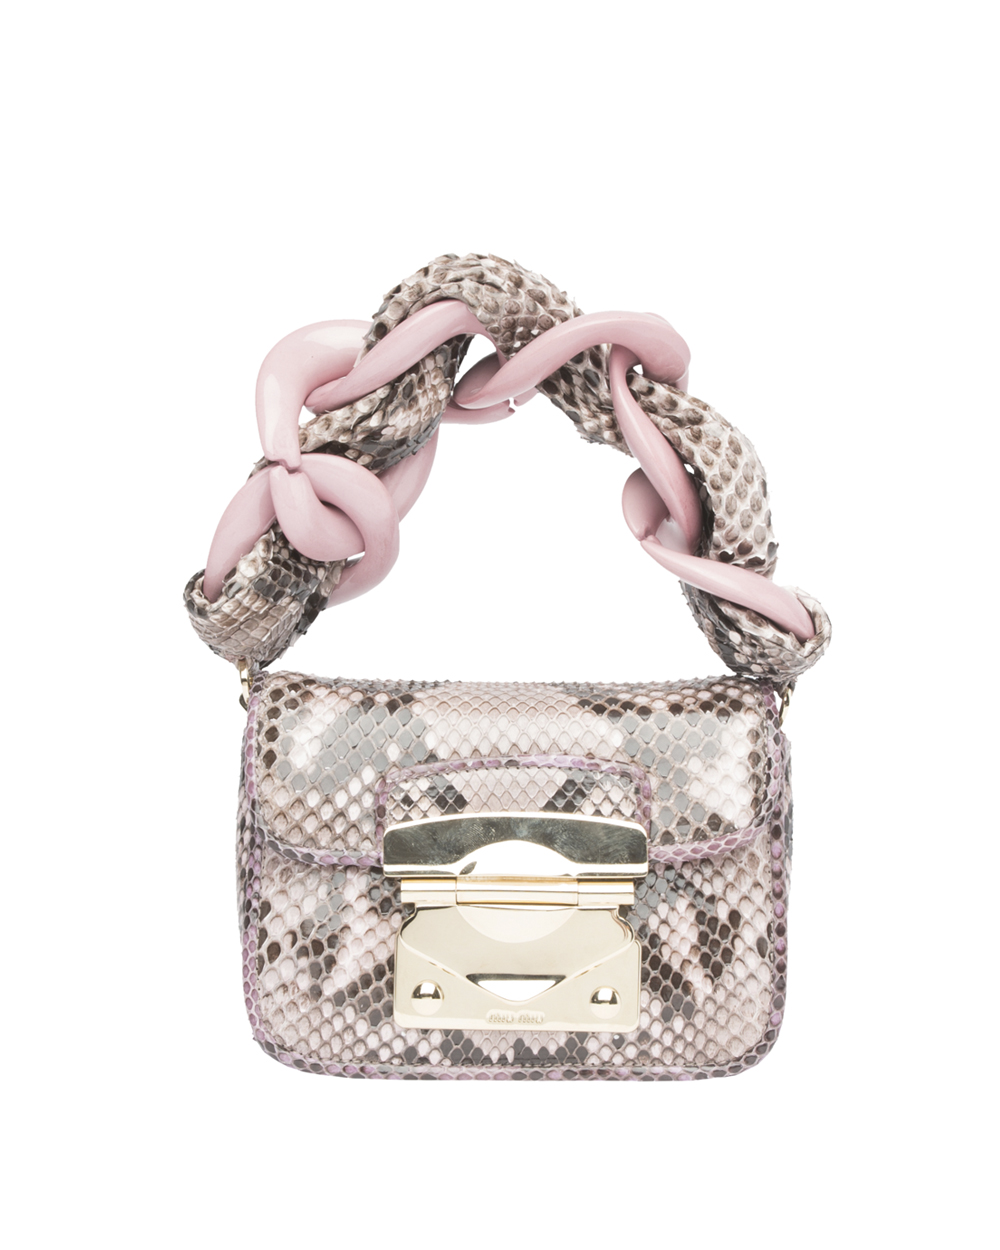 Bag, $3,550, by Miu Miu.